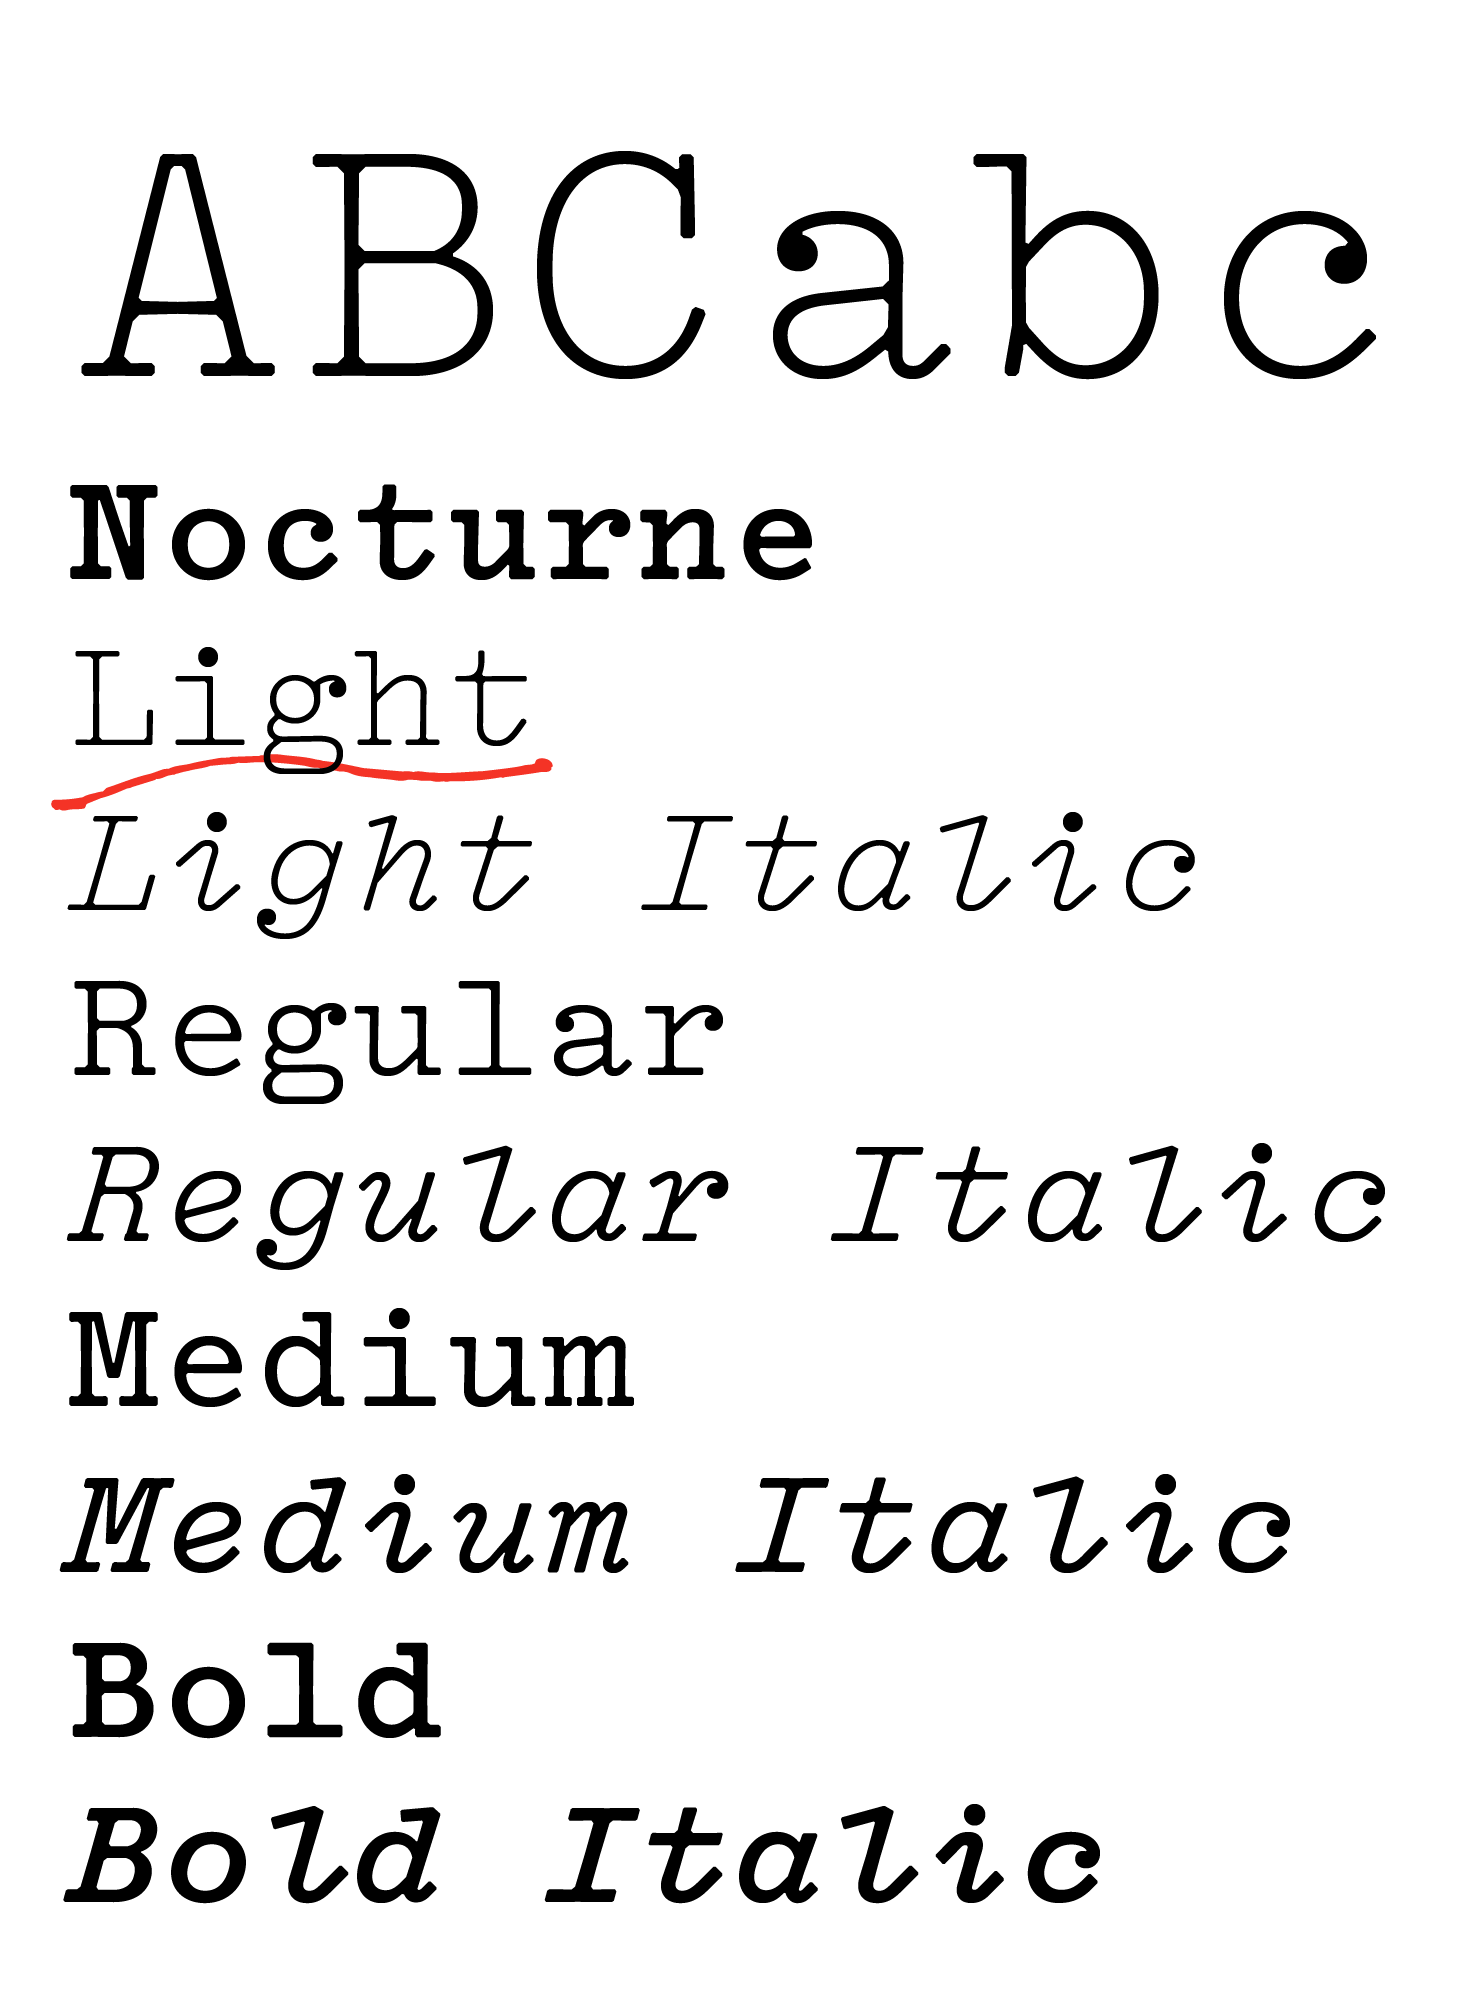 visual identity & type font